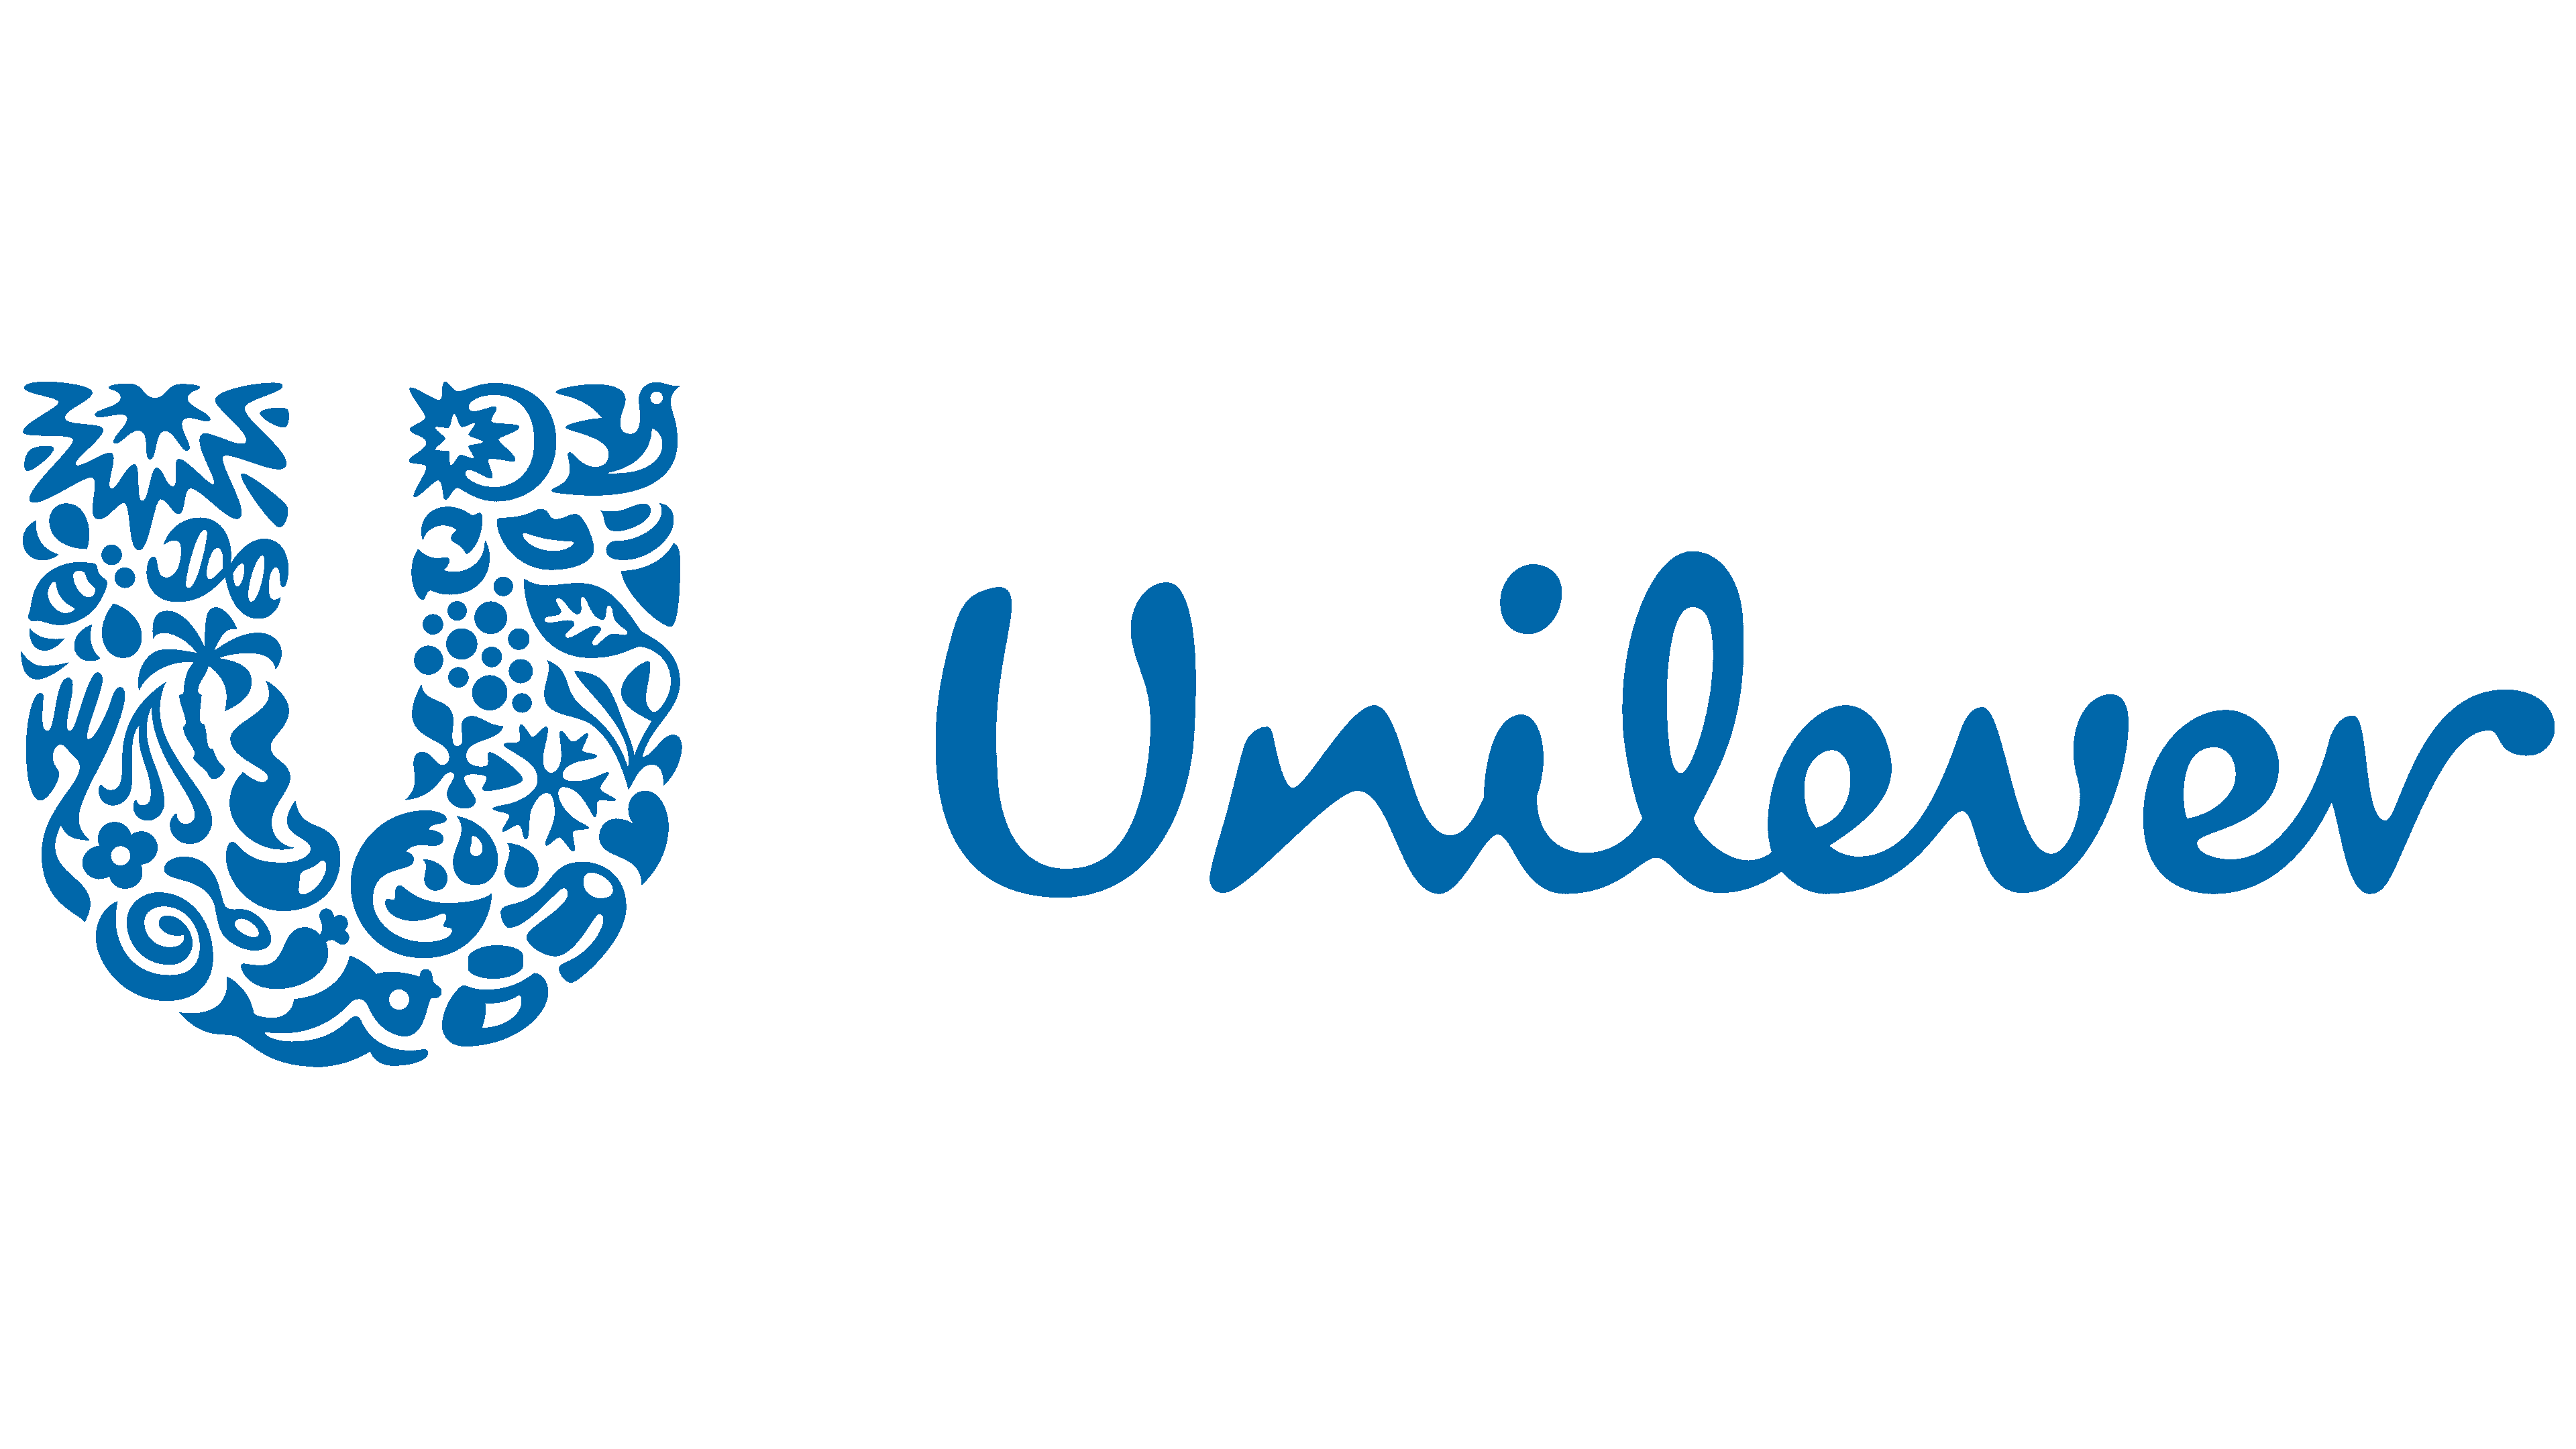 Copy of Unilever-Symbol